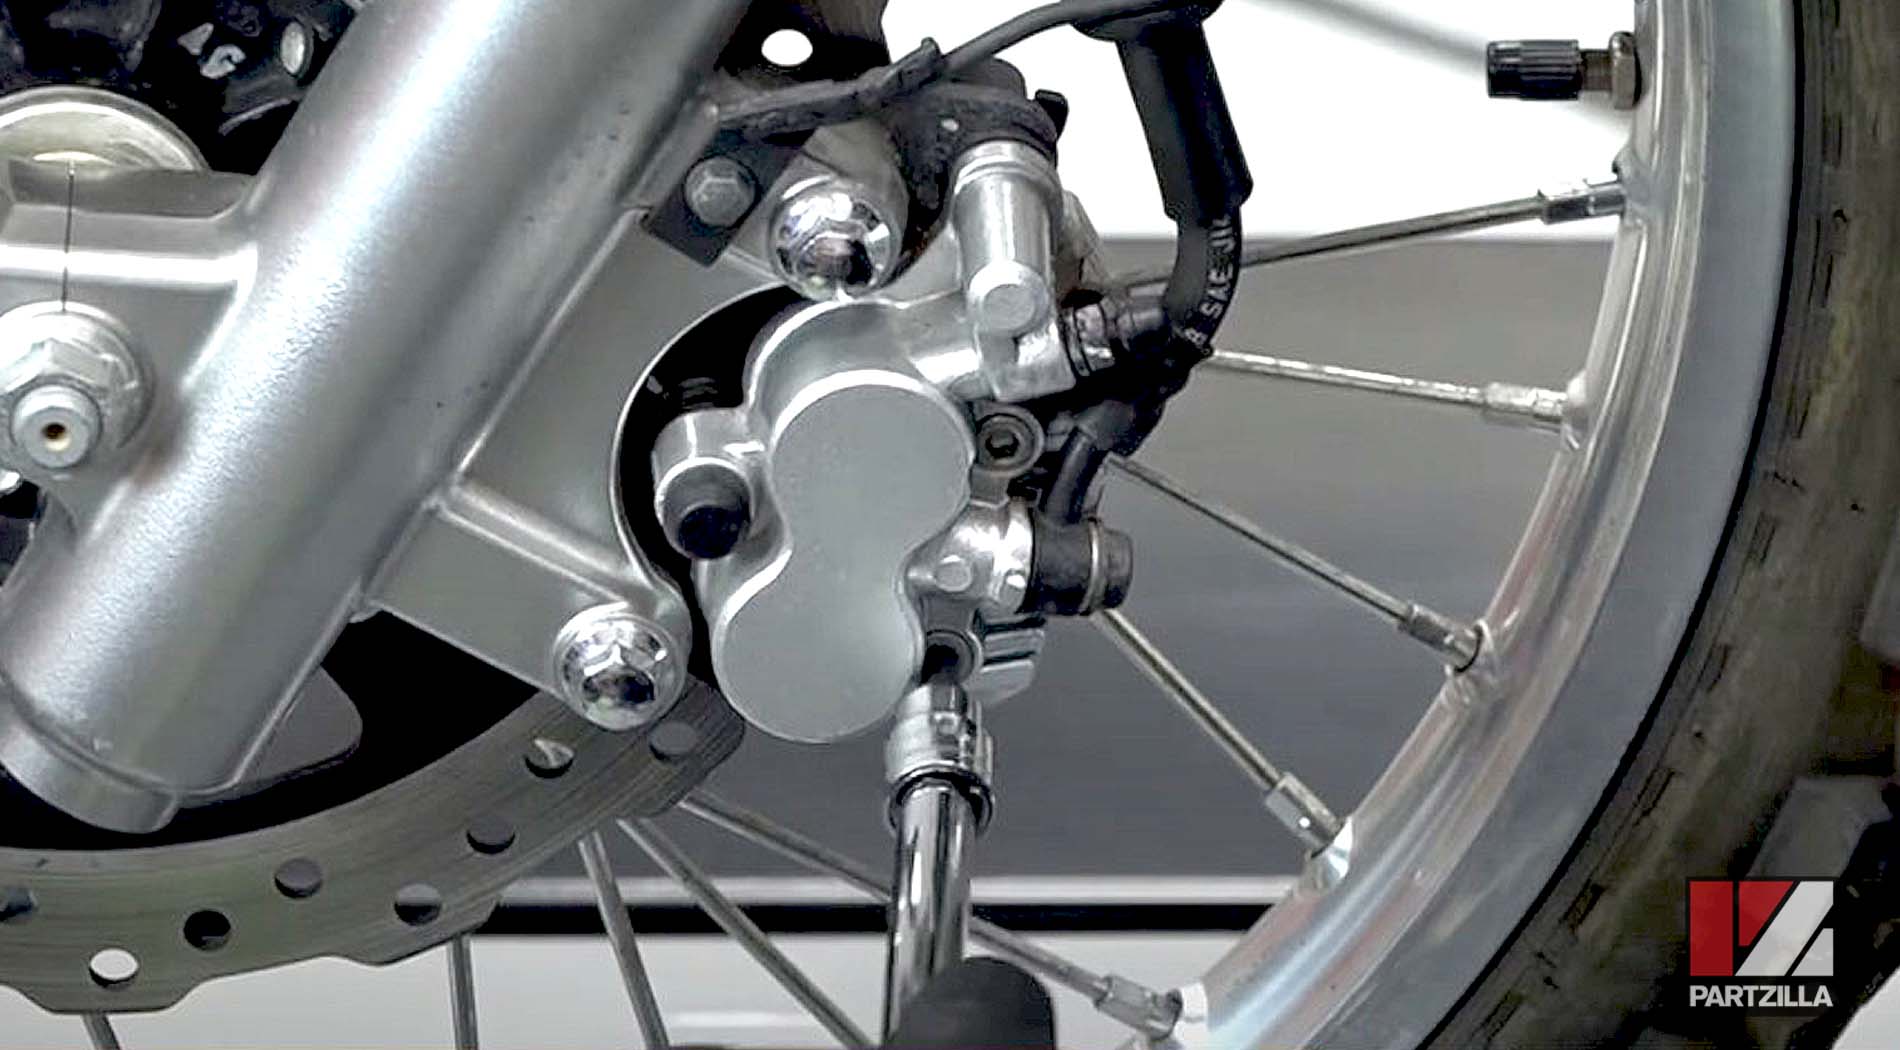 How to change Kawasaki KLR650 dual sport bike front brake pads